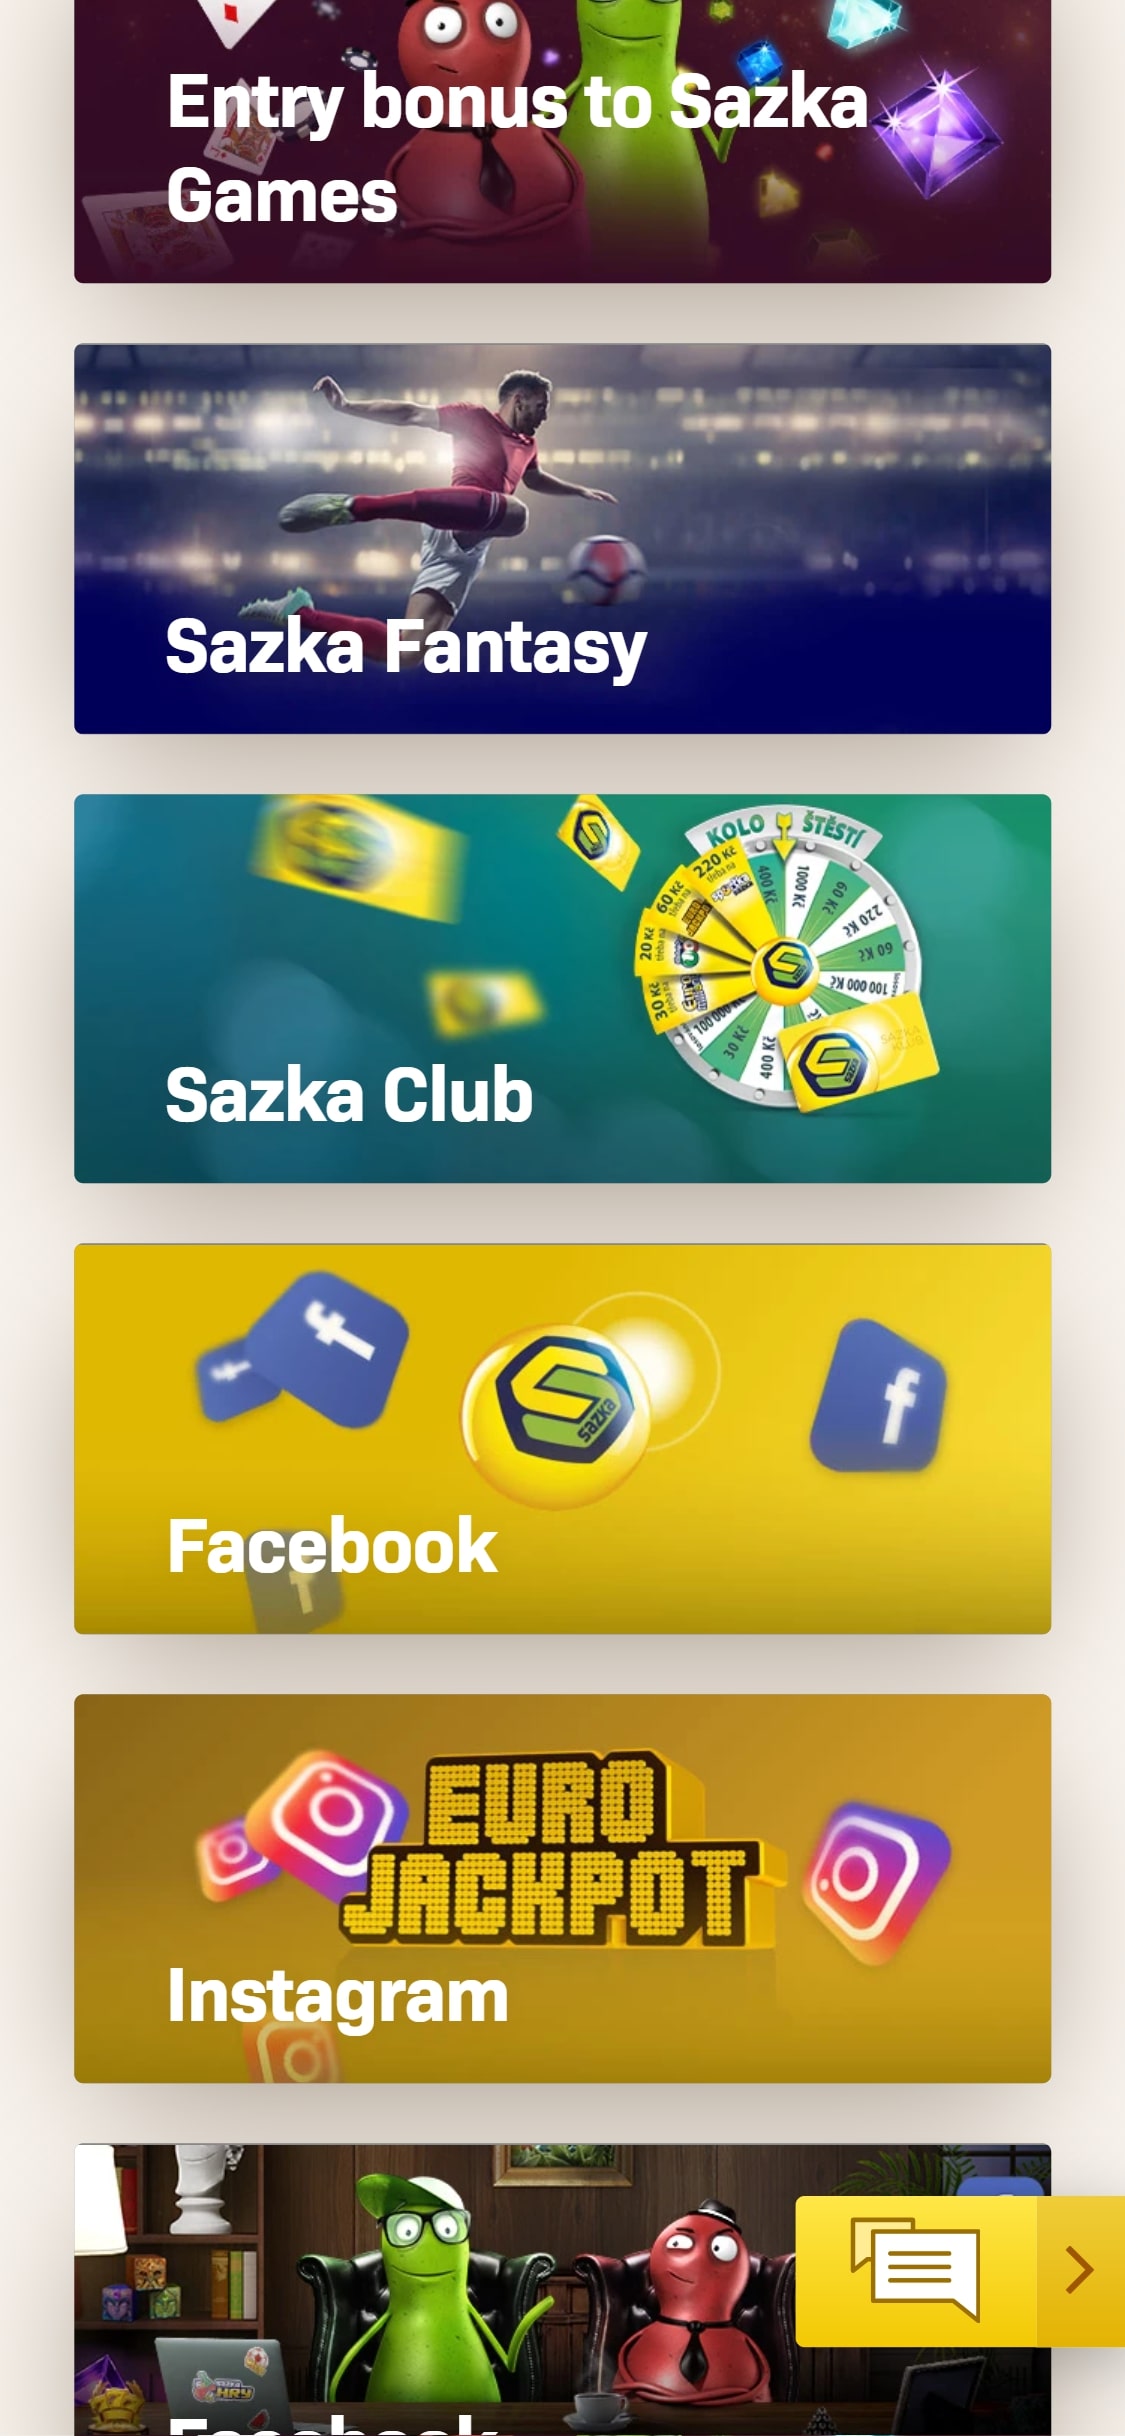 Sazka Hry Mobile No Deposit Bonus Review